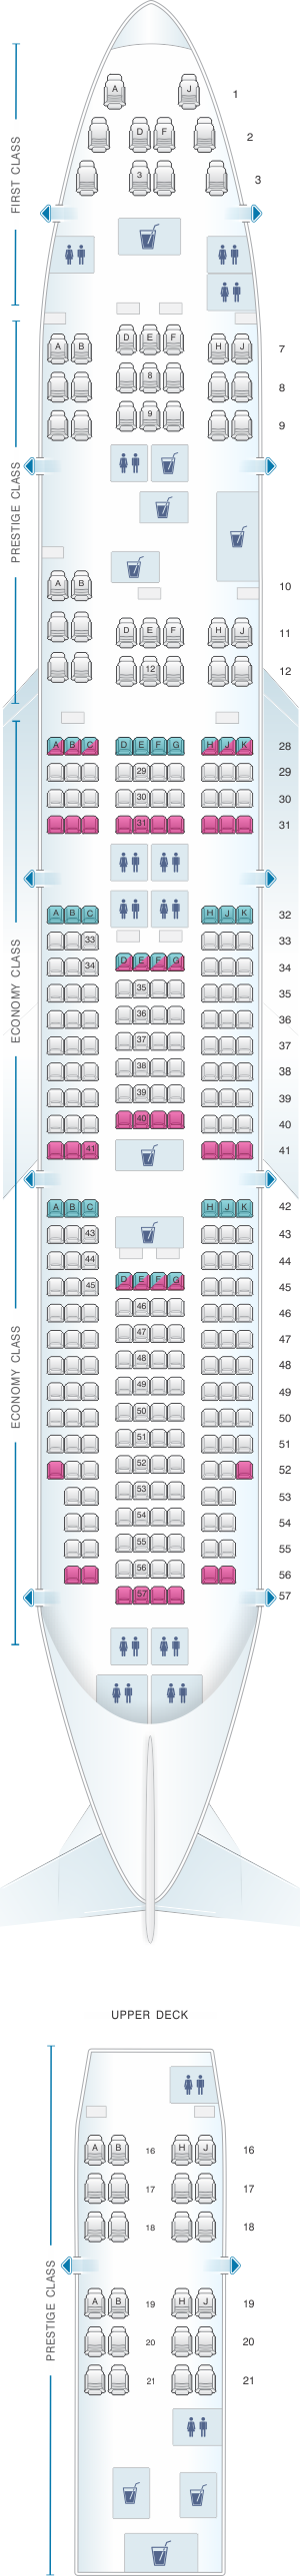 Seat map for Korean Air Boeing B747 400 333PAX